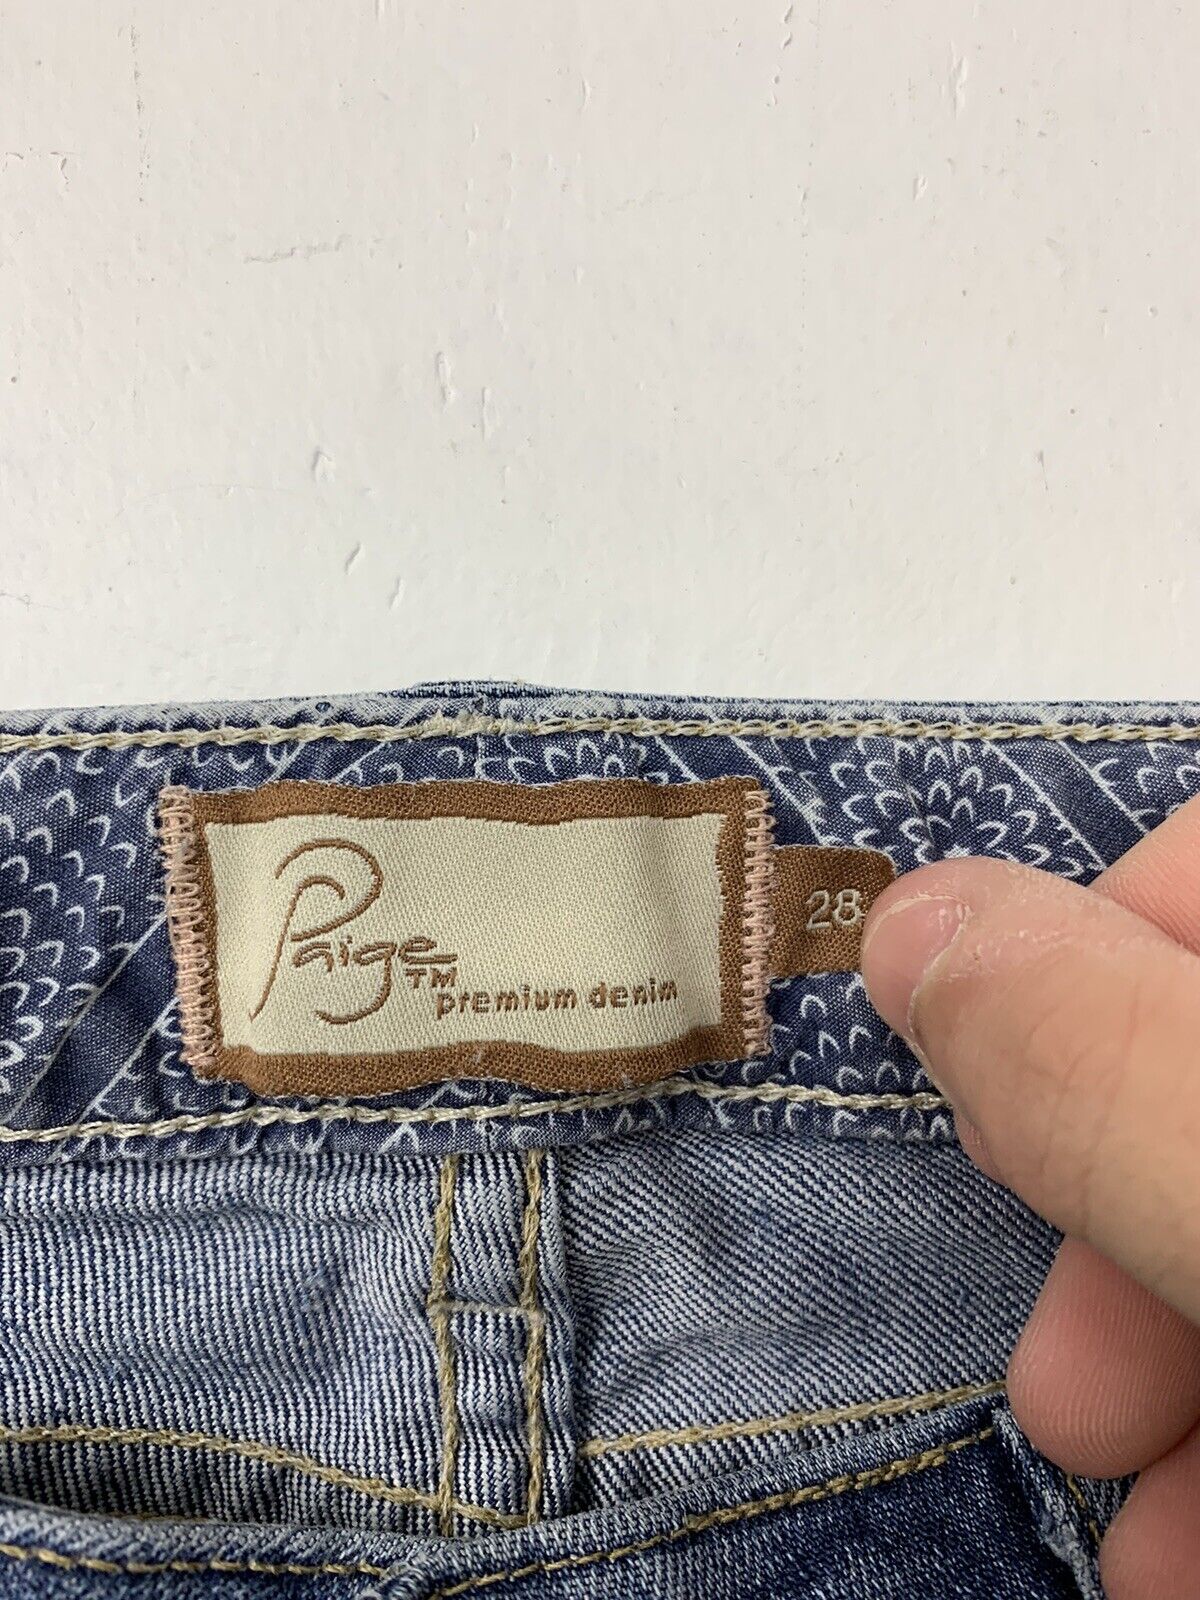 PAIGE®  Premium Denim Jeans and Apparel